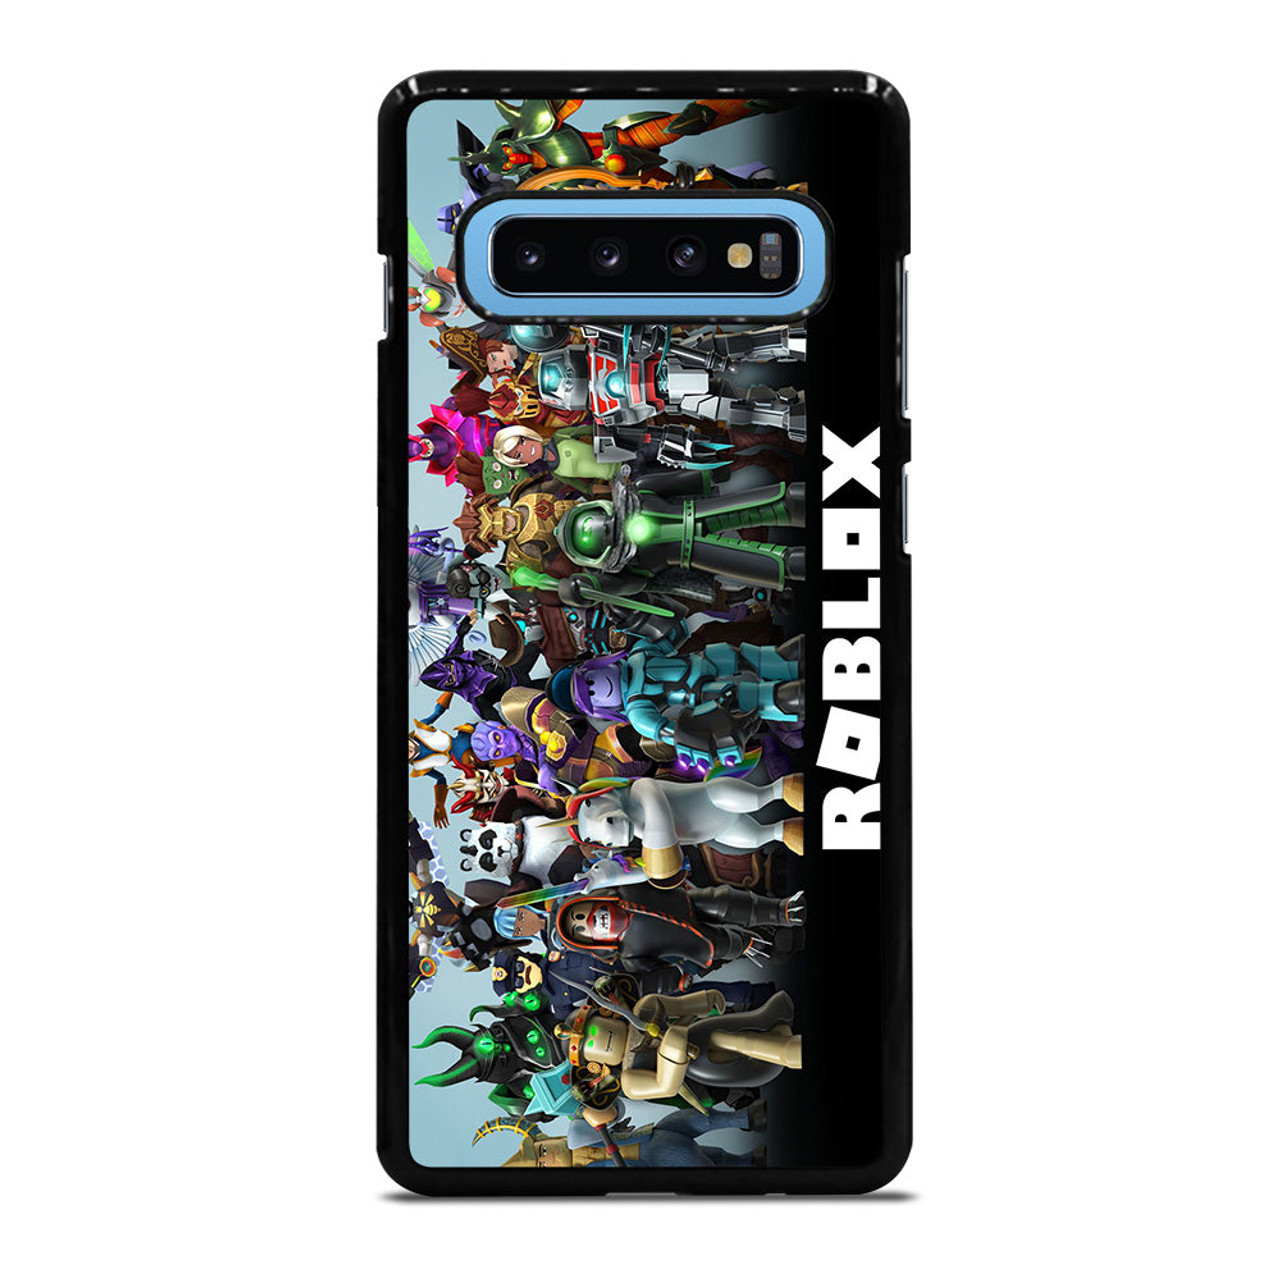 Roblox Phone Case iphone samsung galaxy htc lg case cover